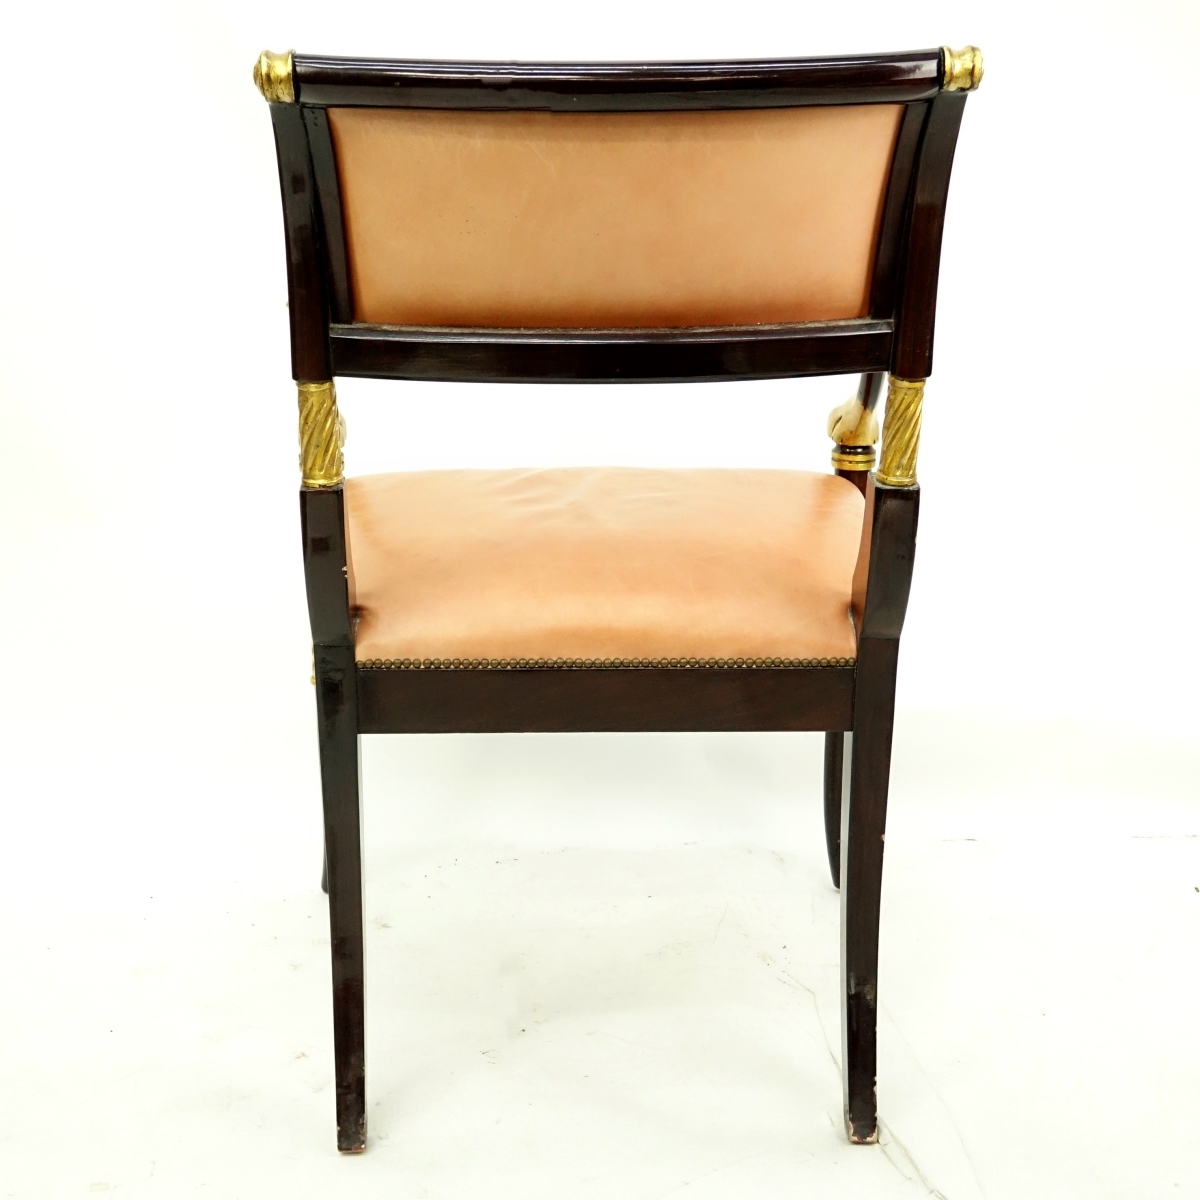 Regency style Arm Chair